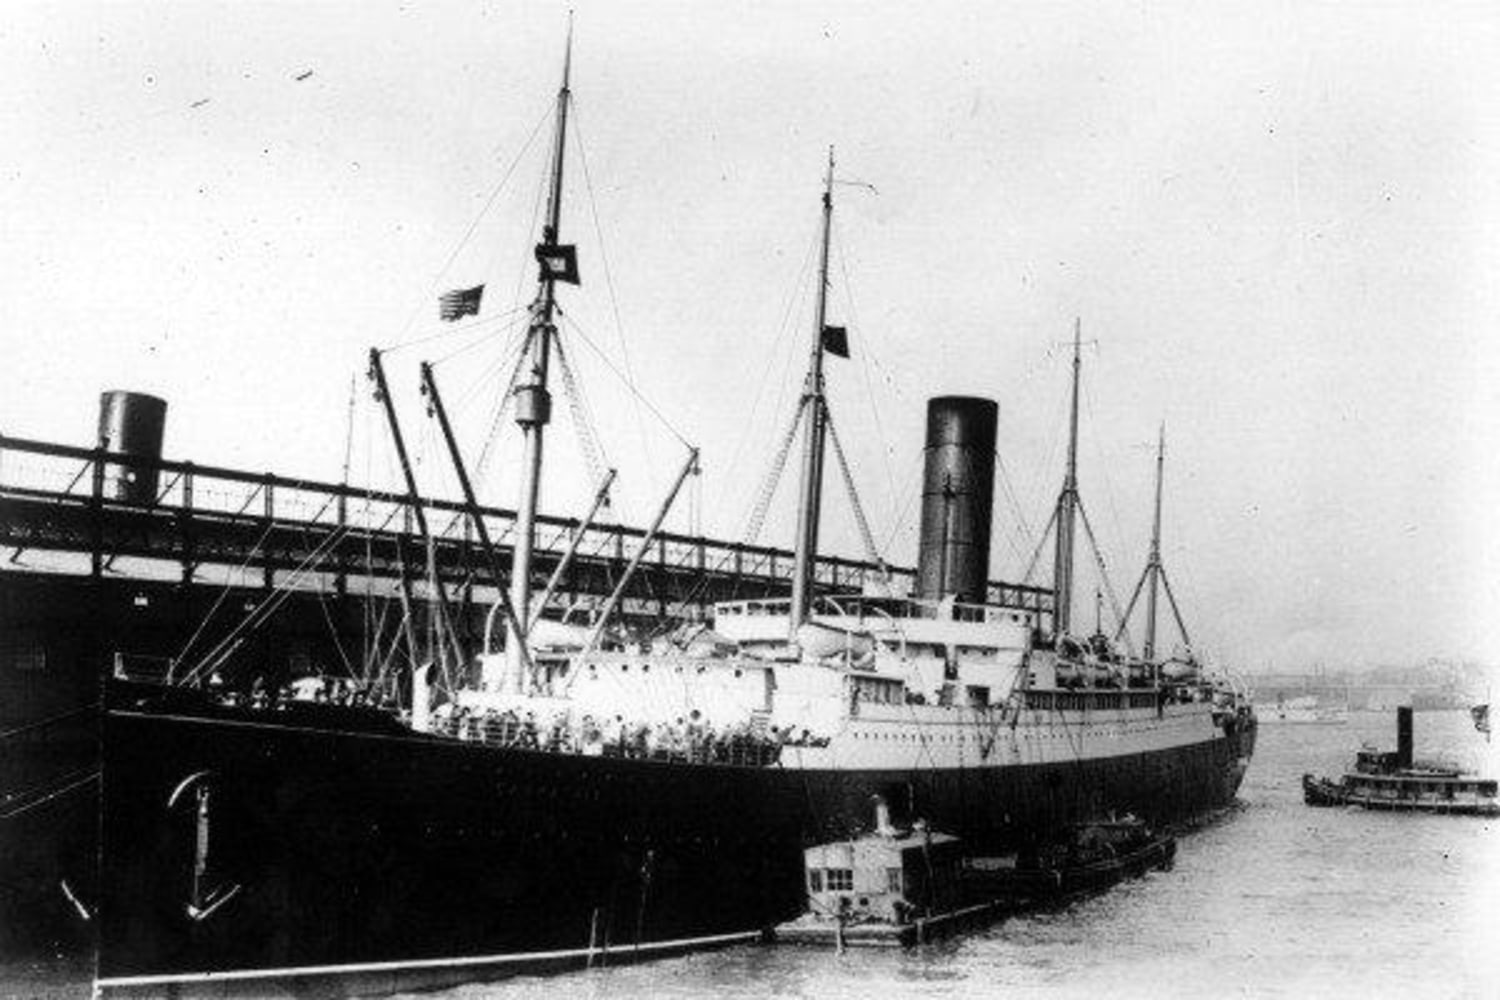 The Titanic survivors' journey to land